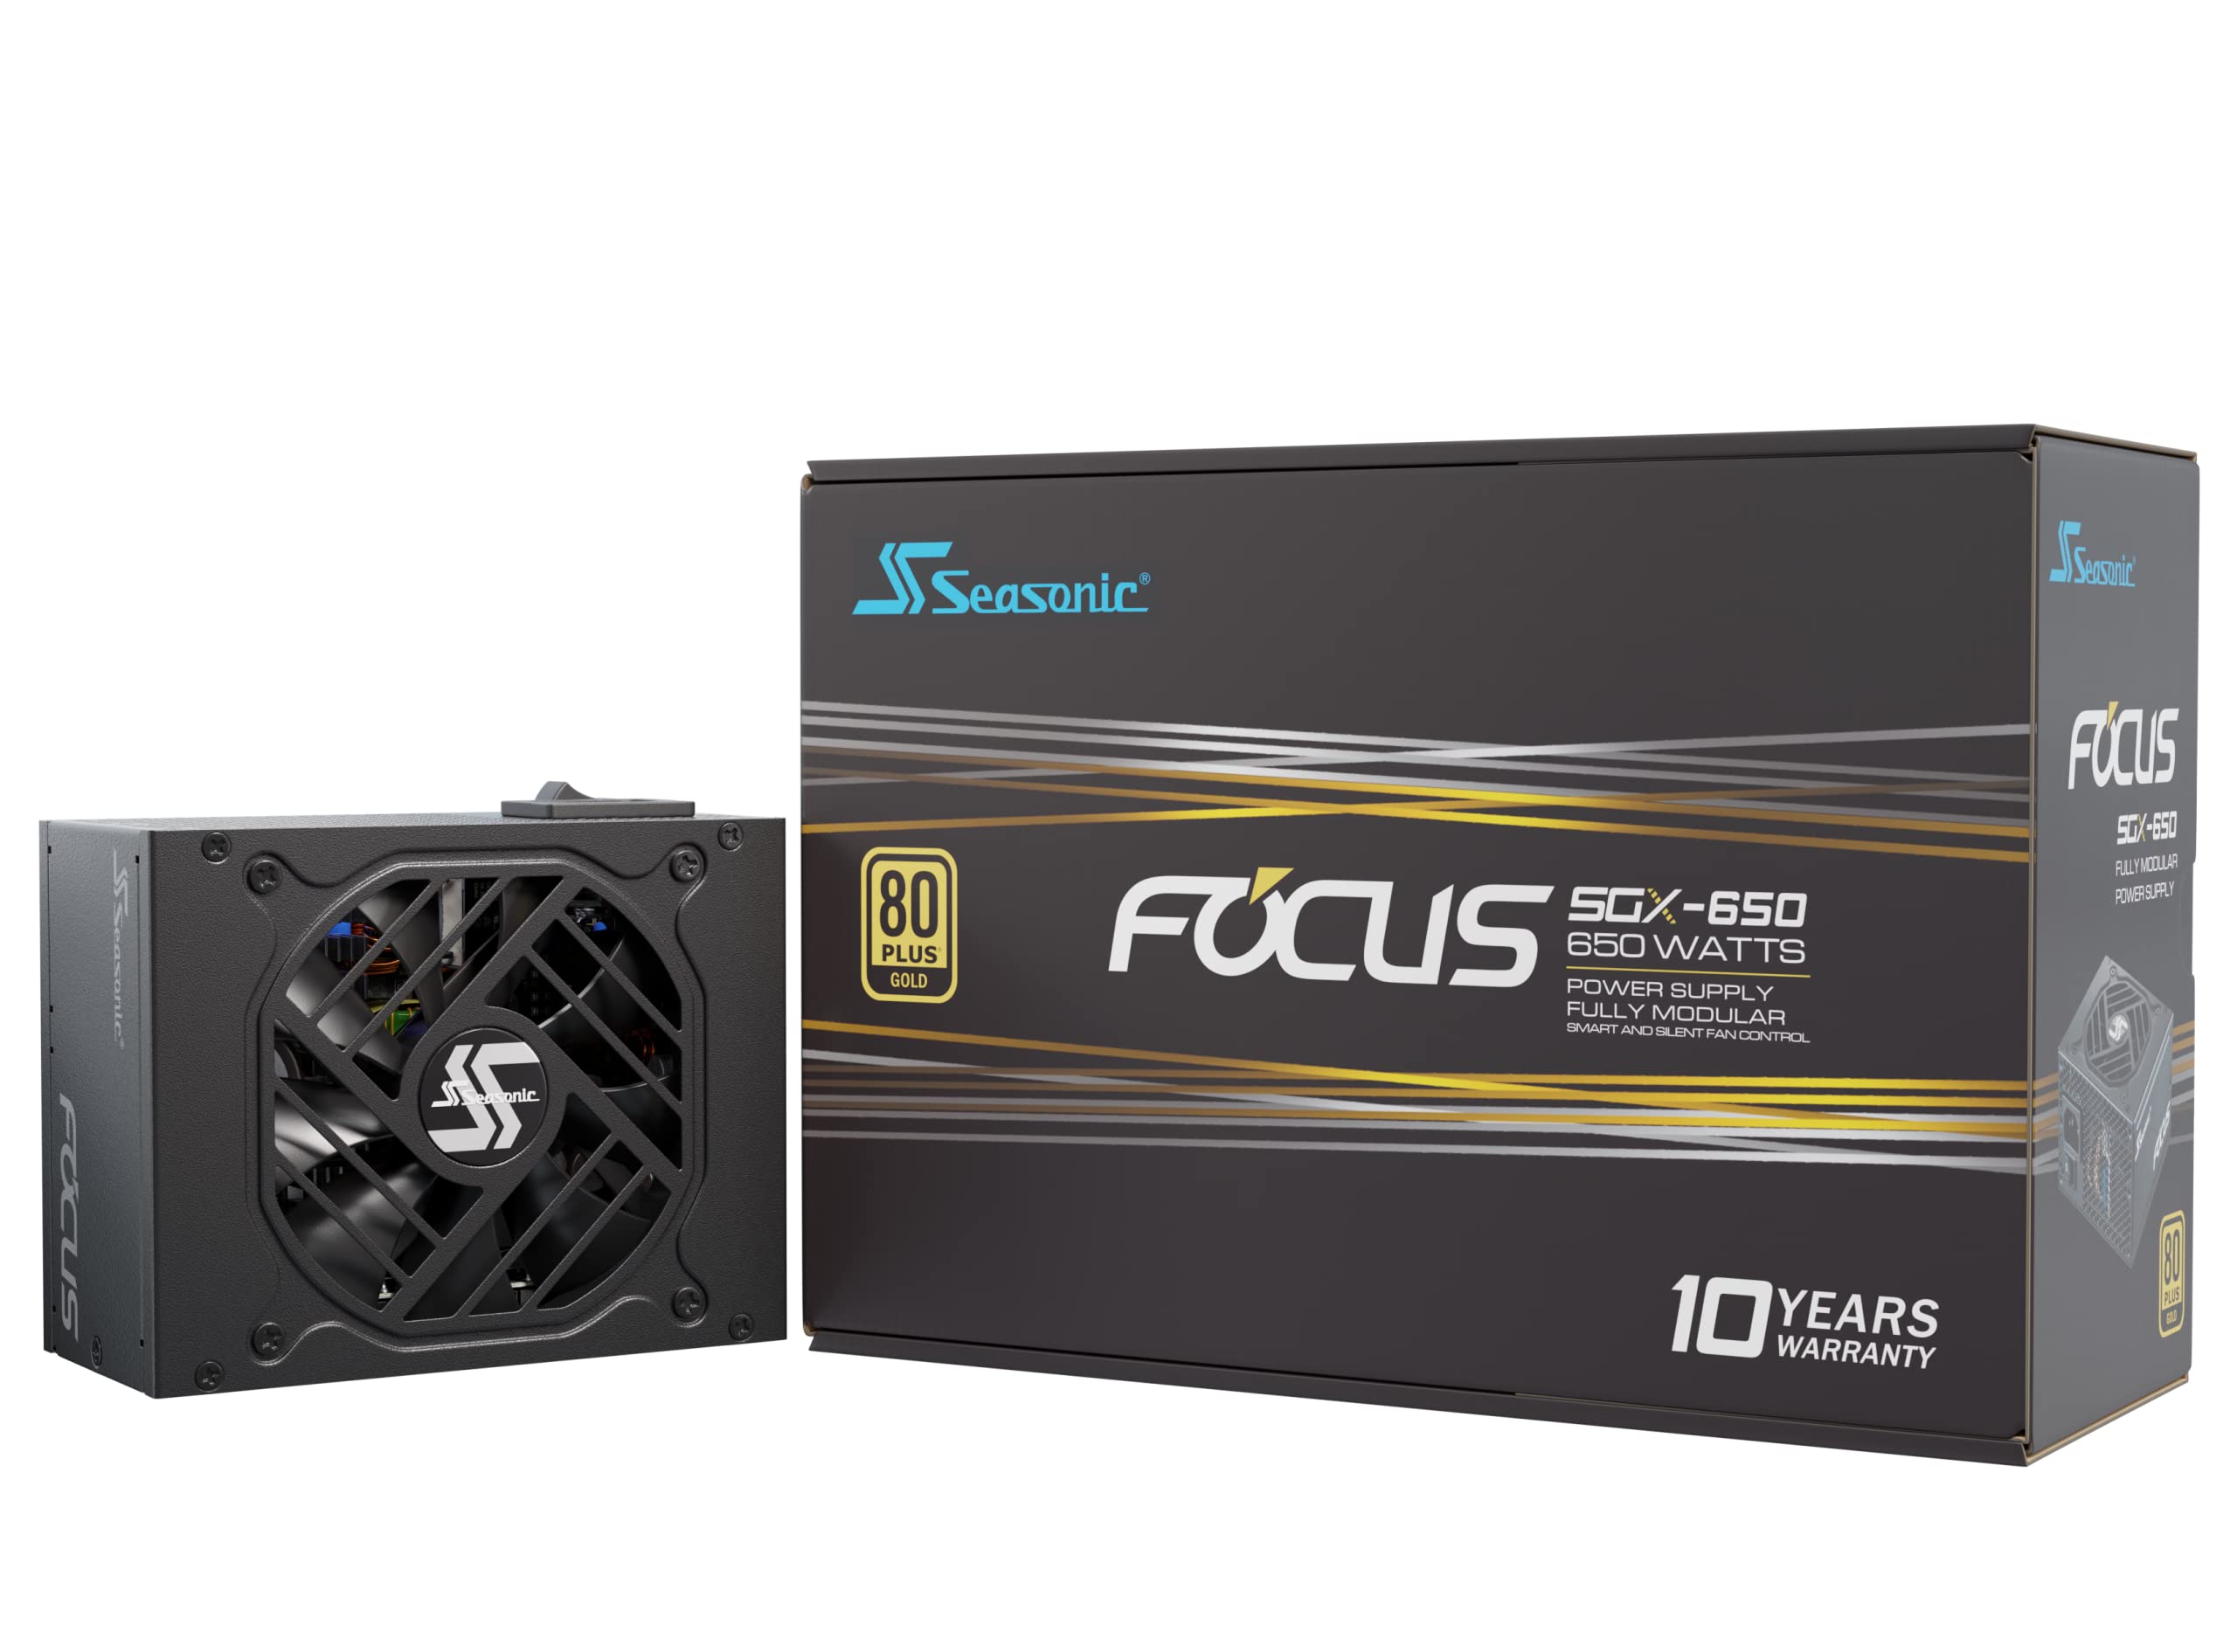 Amazon - Seasonic Focus SGX-650(2021) 650W 80+ Gold Full Modular SFX Power Supply, 10 Year Warranty - $116